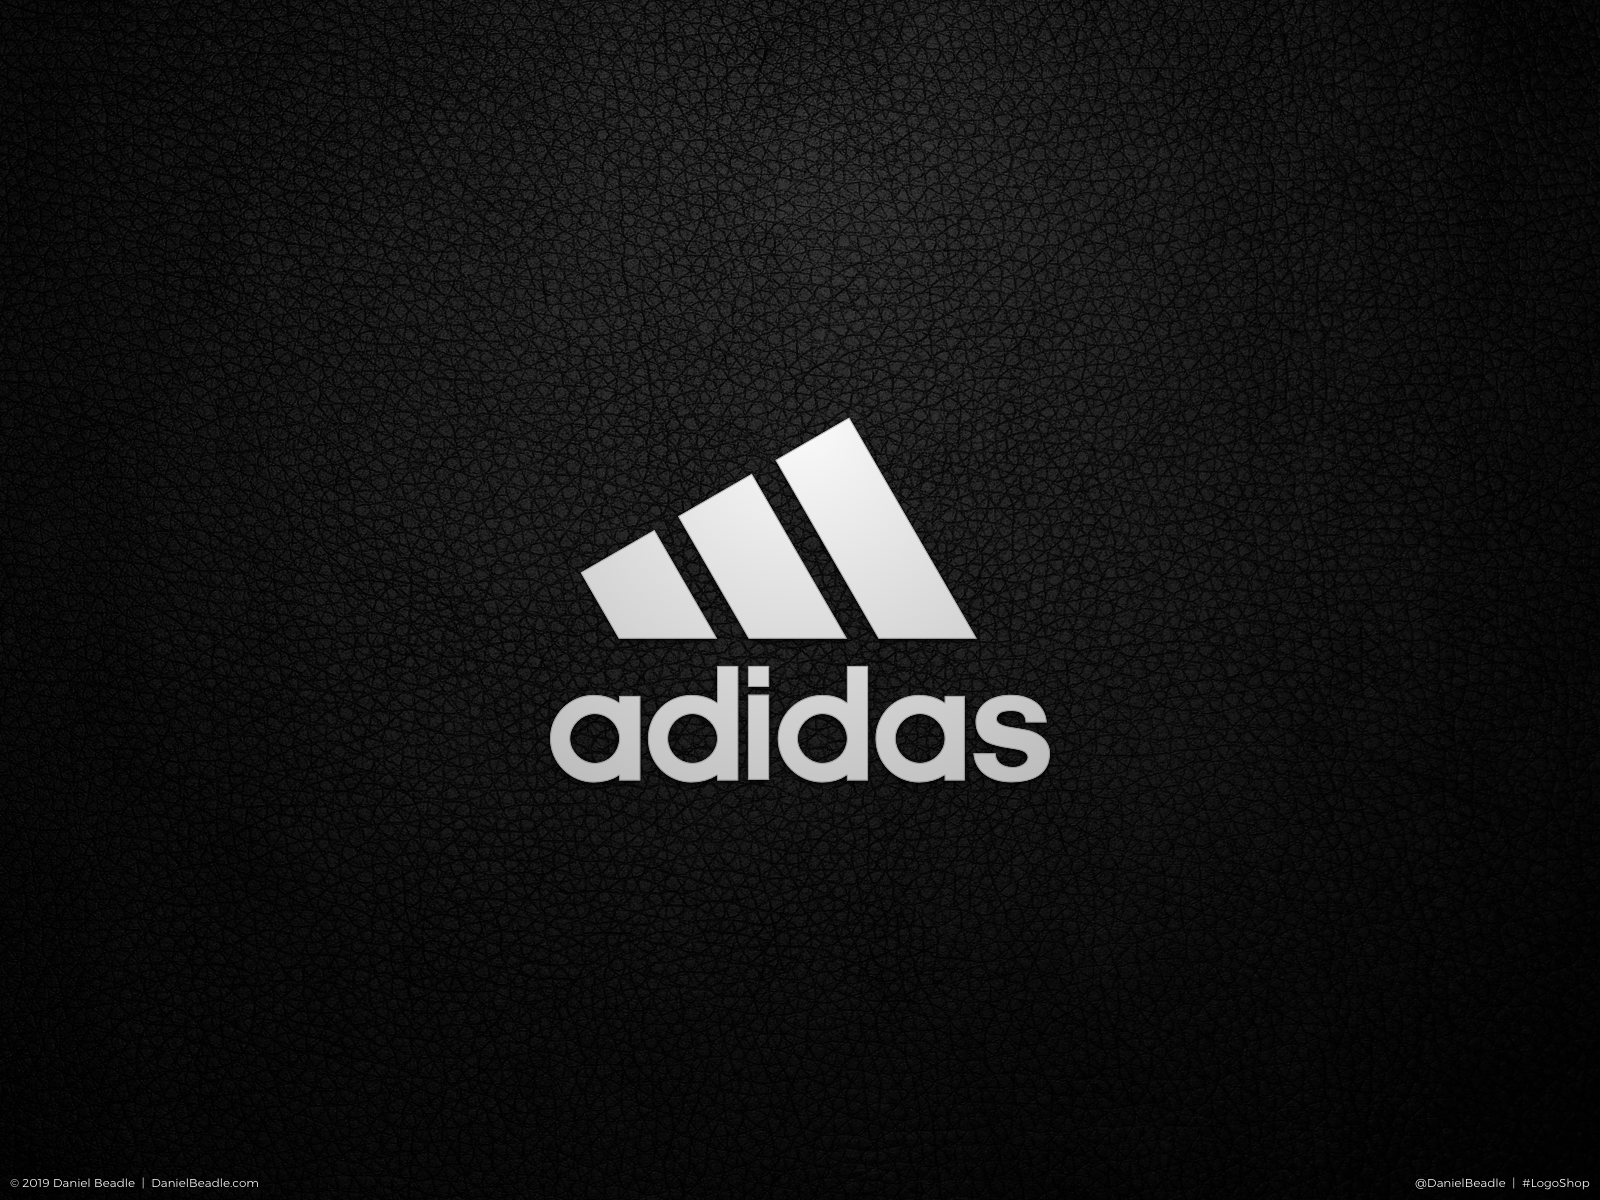 Adidas Logo by Daniel Beadle on Dribbble